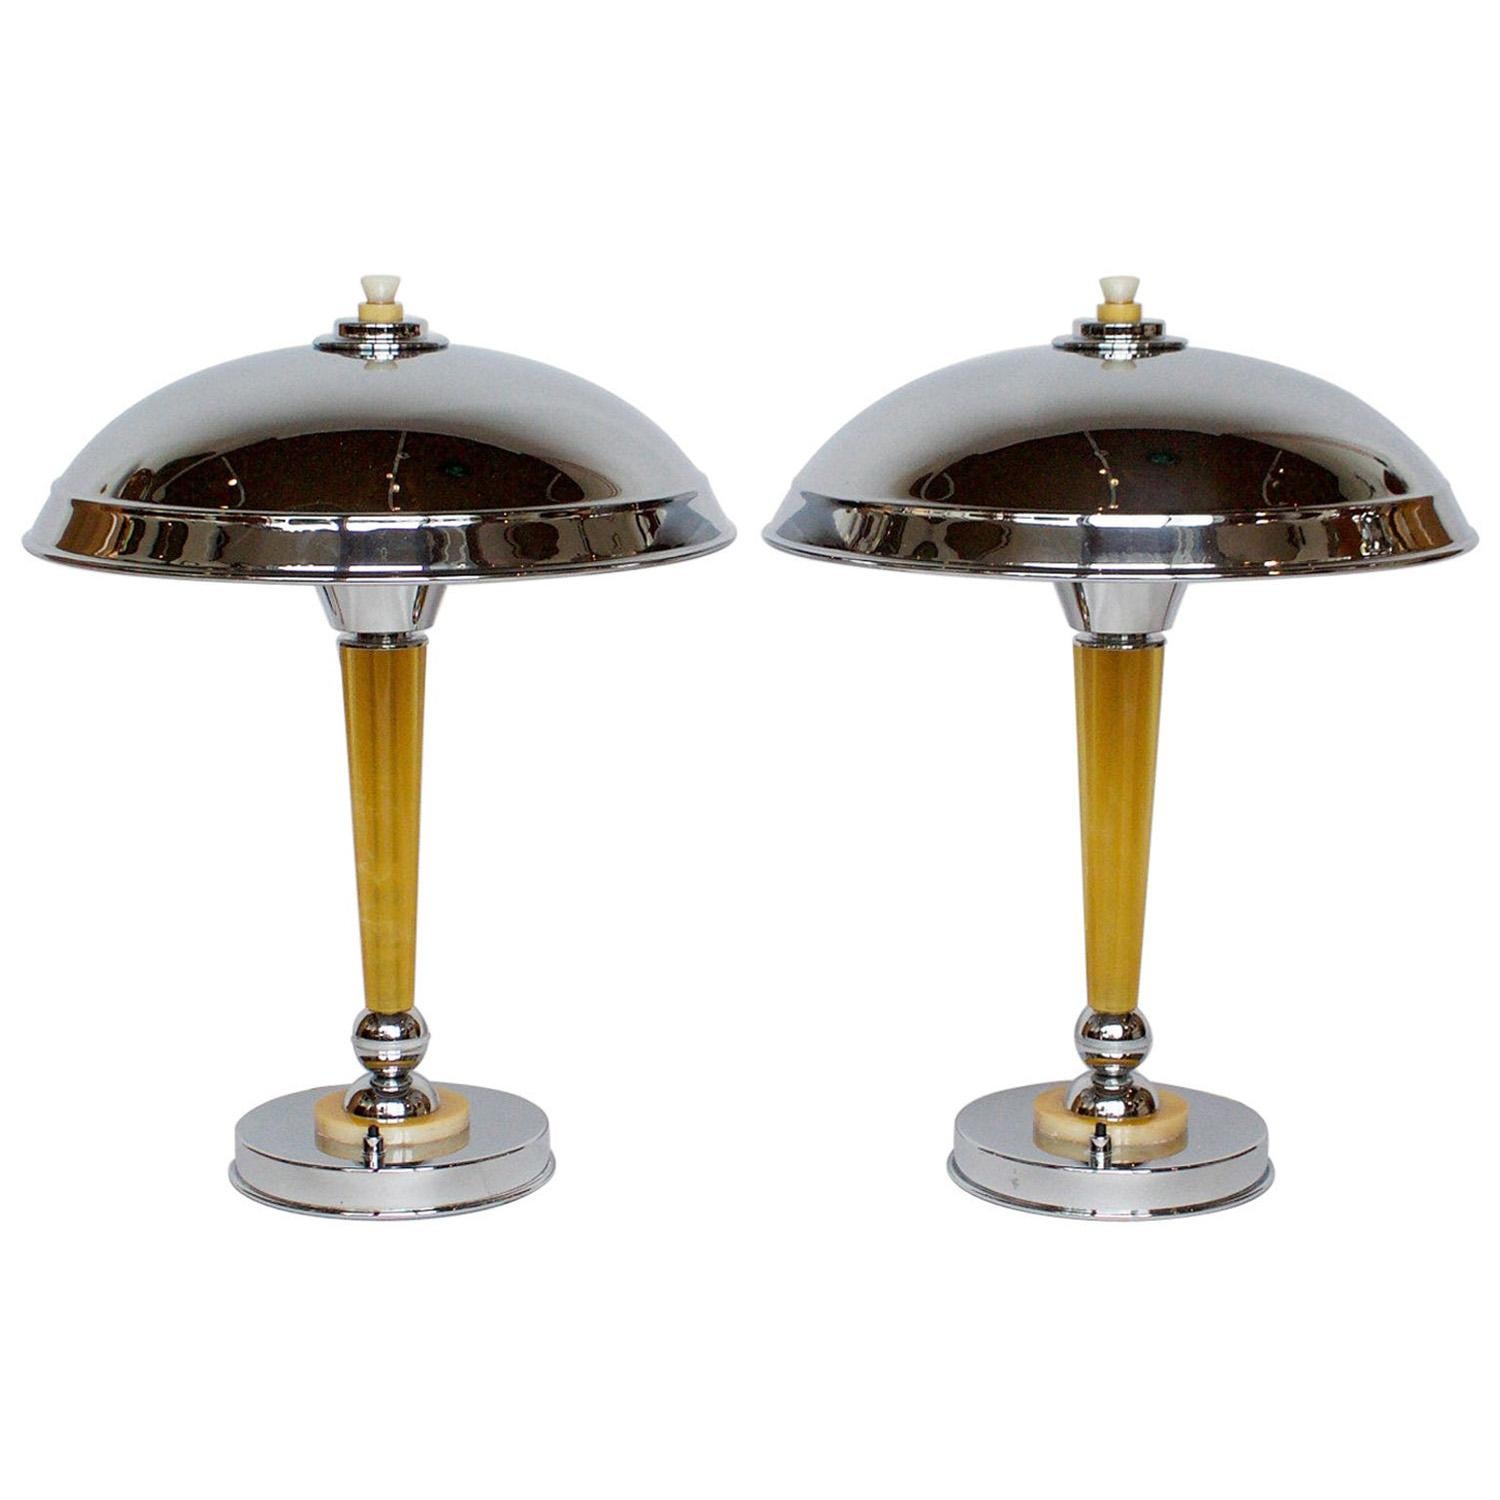 Pair of Art Deco Chromed Metal and Bakelite Dome Lamps